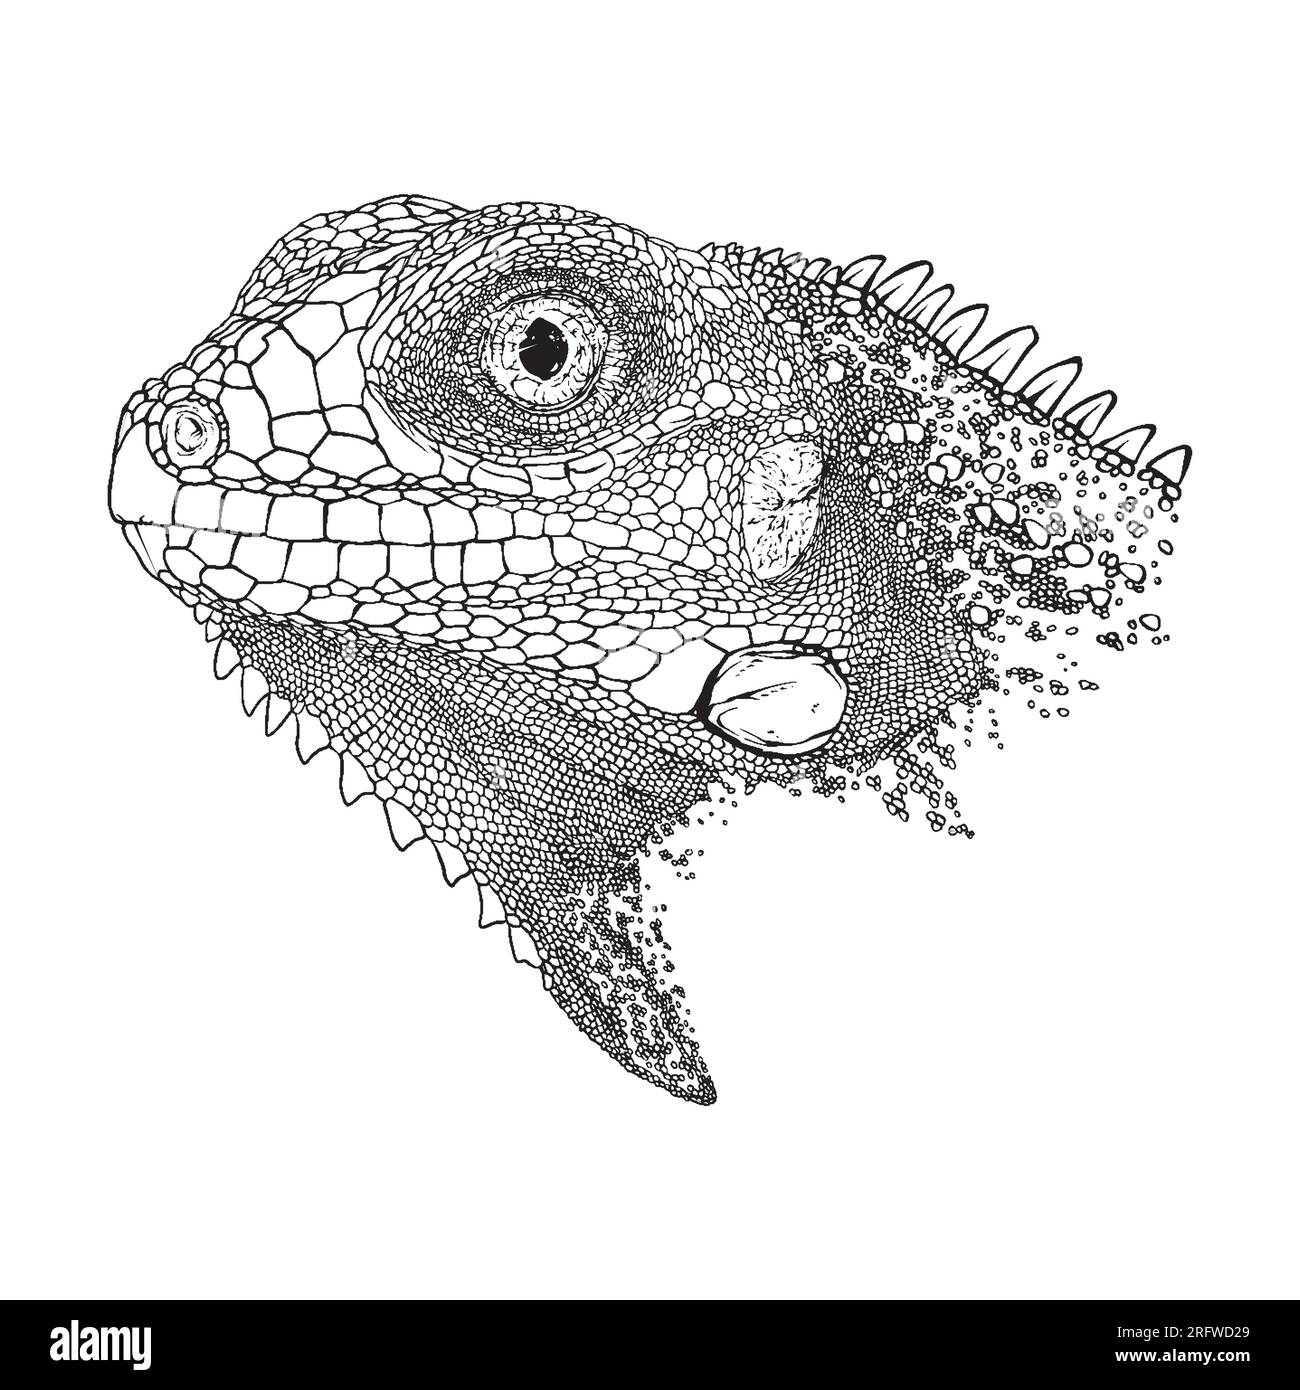 Illustration de dessin d'iguane dessin de vecteur grunge contour animal Illustration de Vecteur